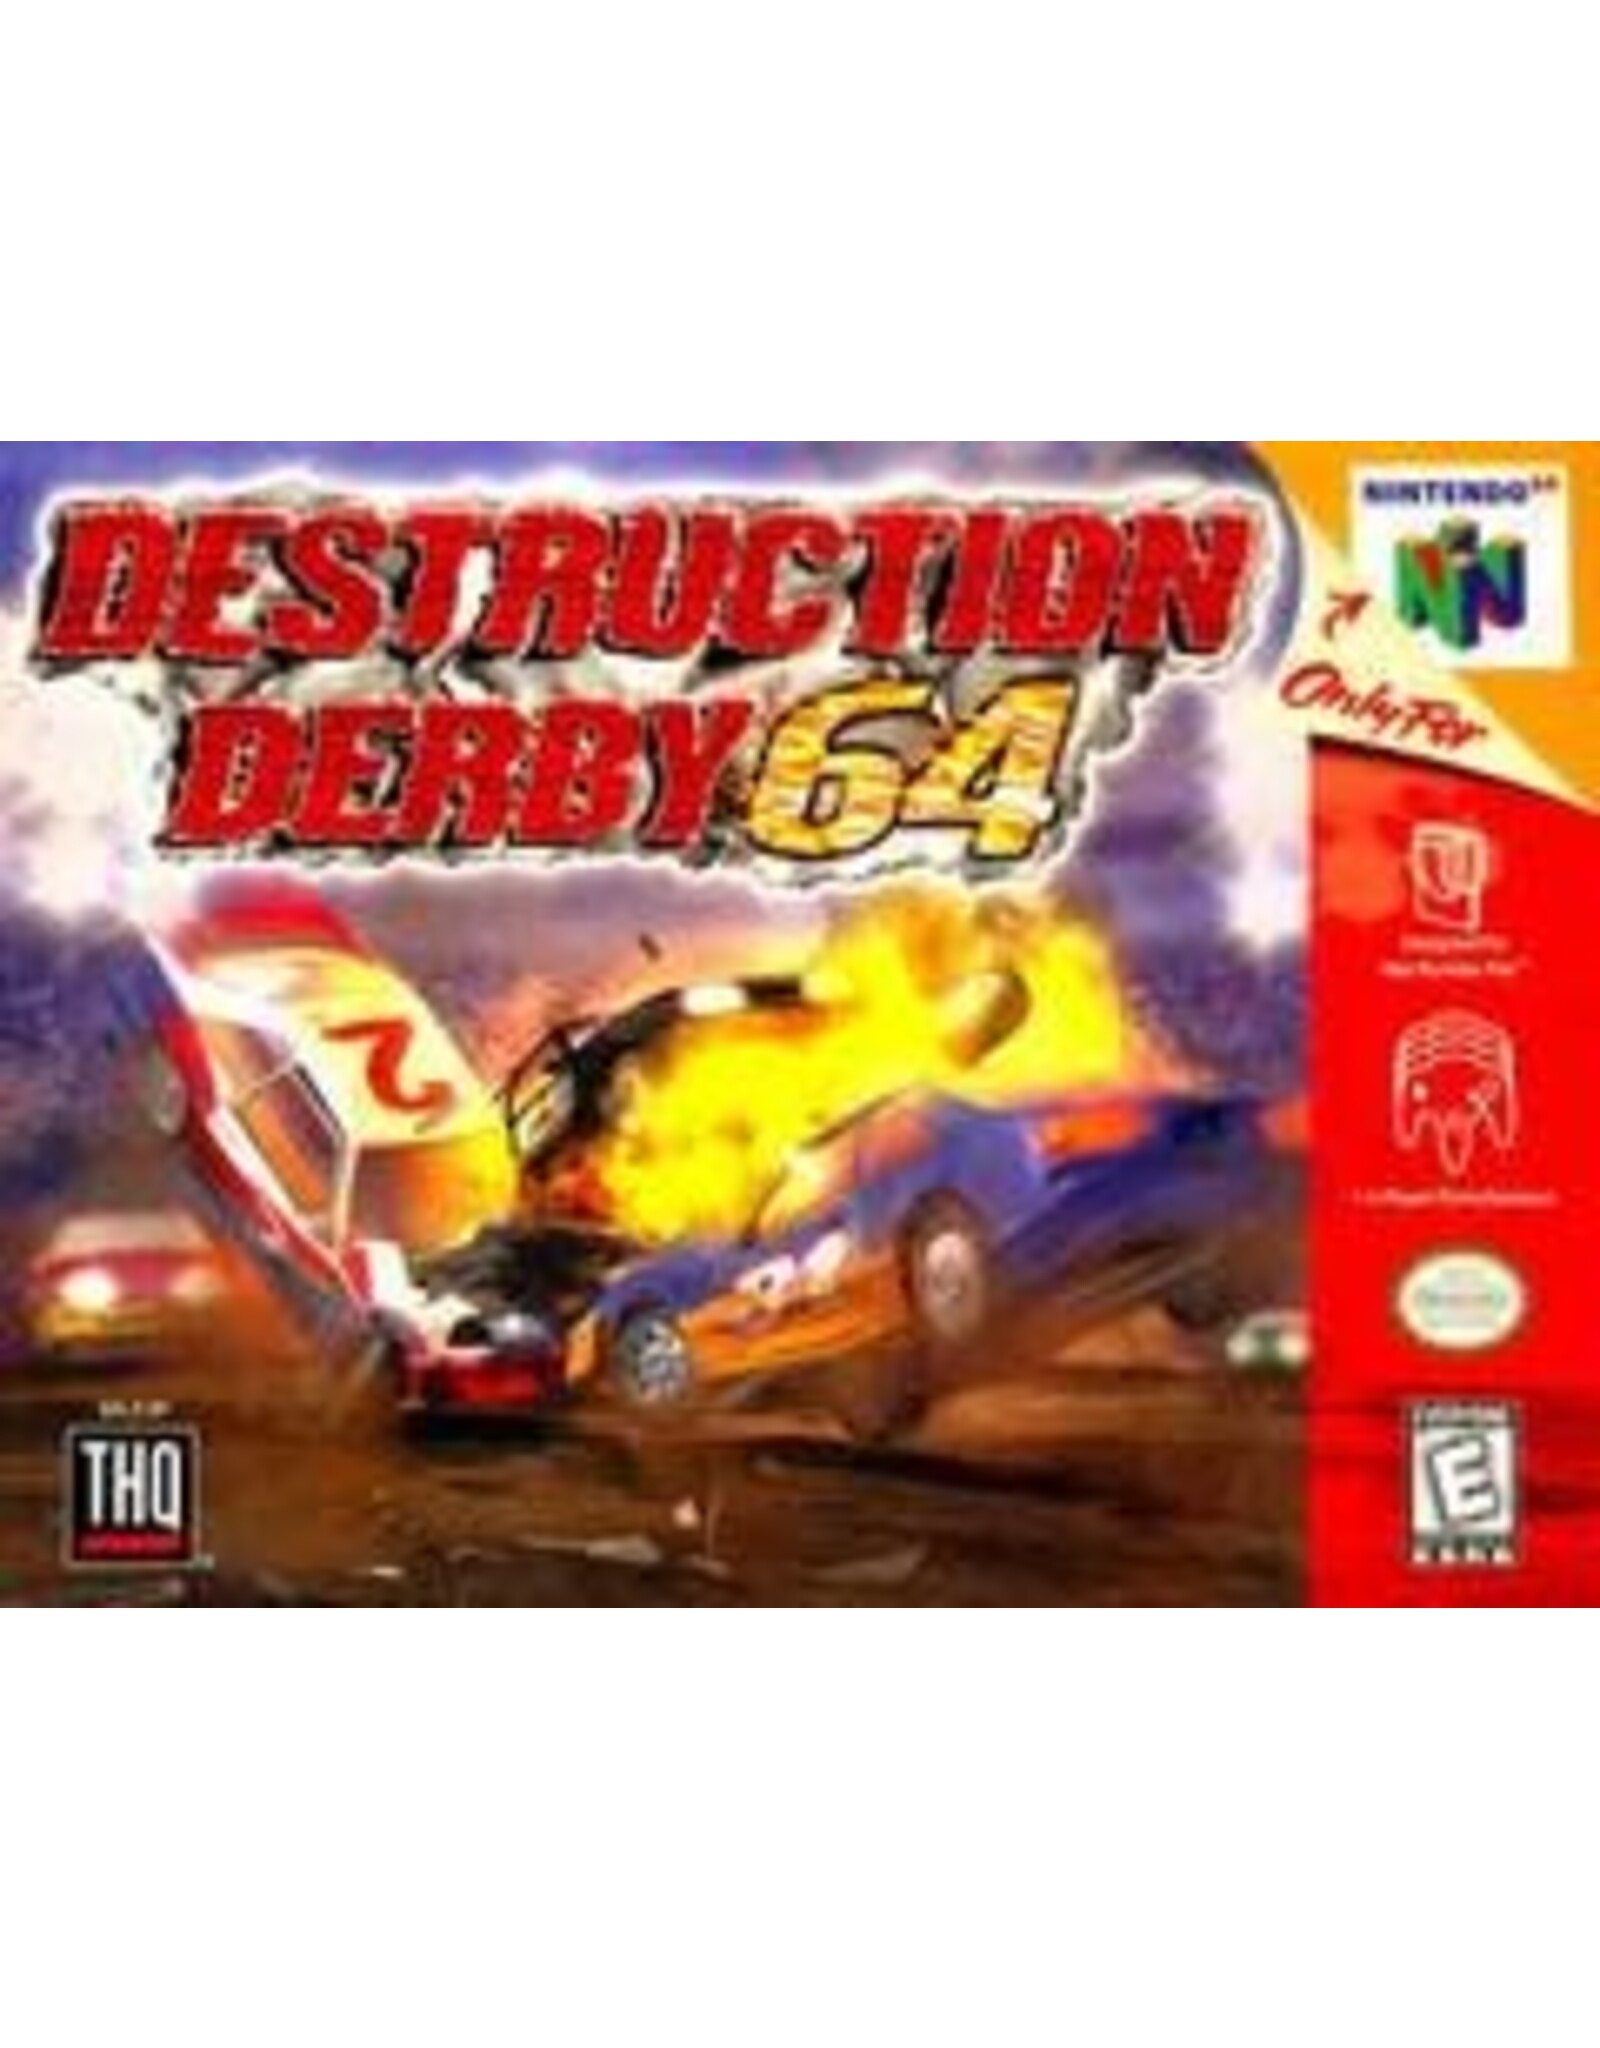 Nintendo 64 Destruction Derby 64 (Cart Only)